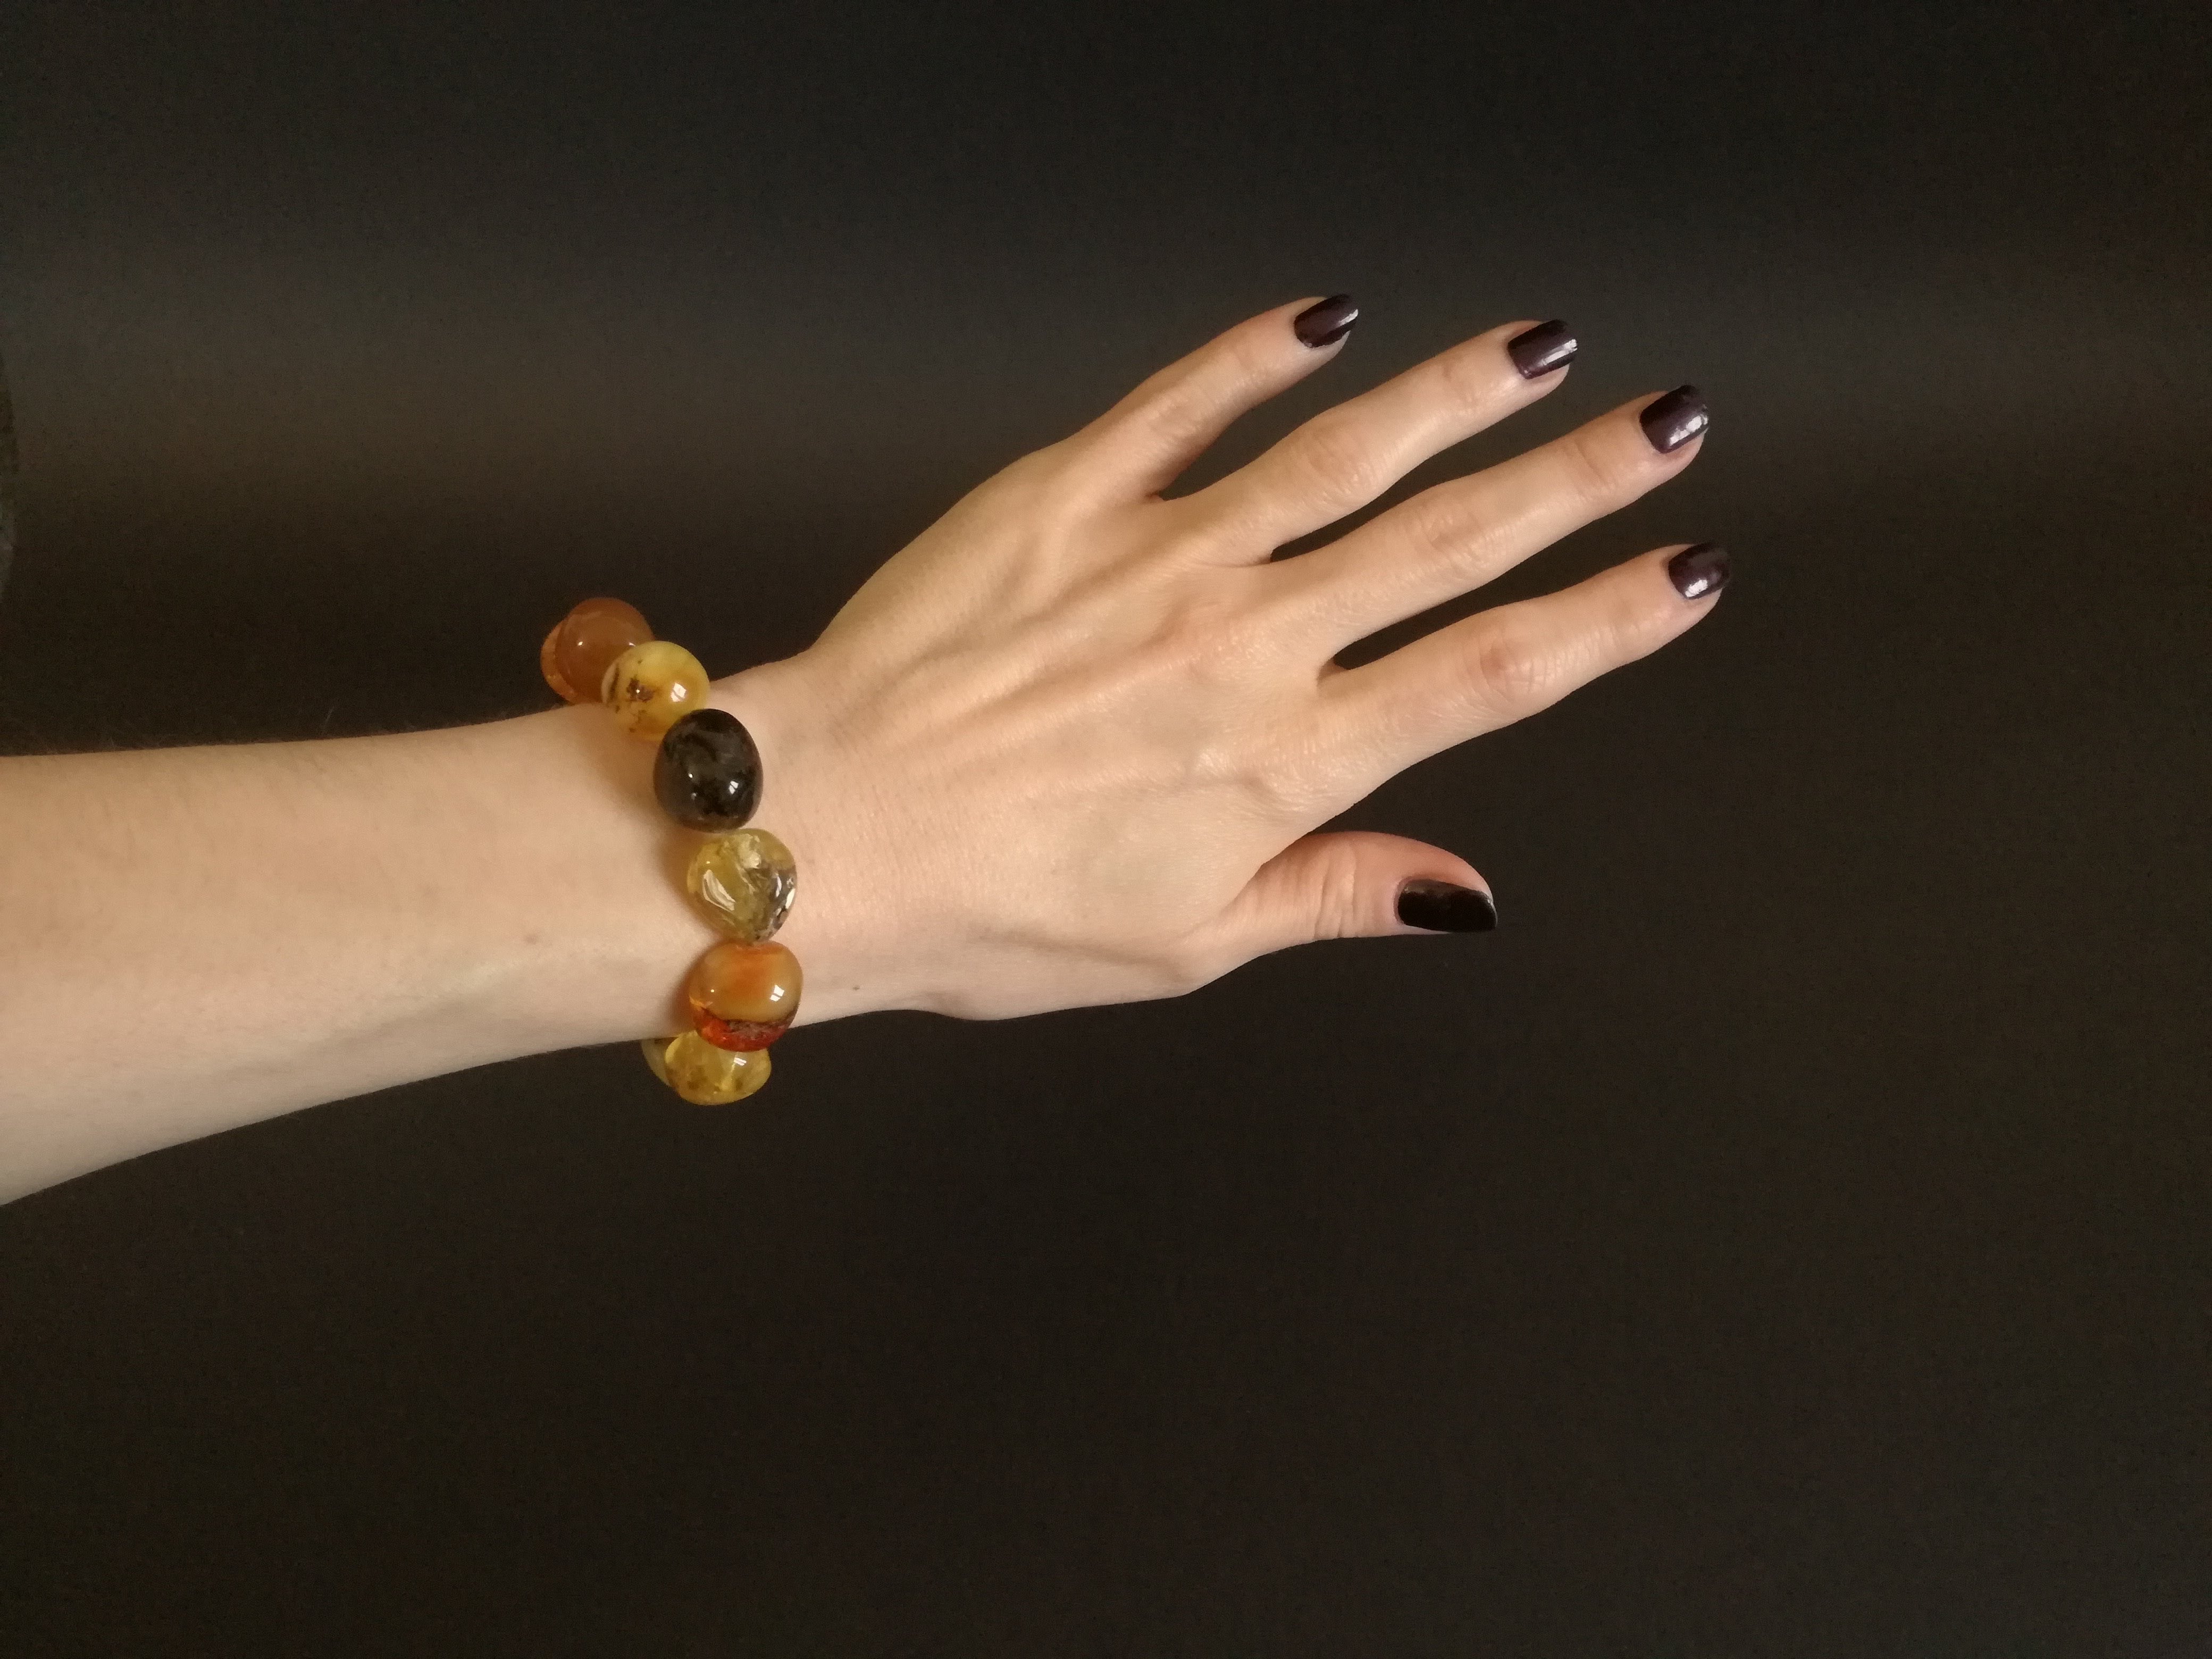 Genuine Handmade Amber Bracelet on Hand, Multicolor, medium Size, Small Faceted Beads, , For Her, Nursing Mums